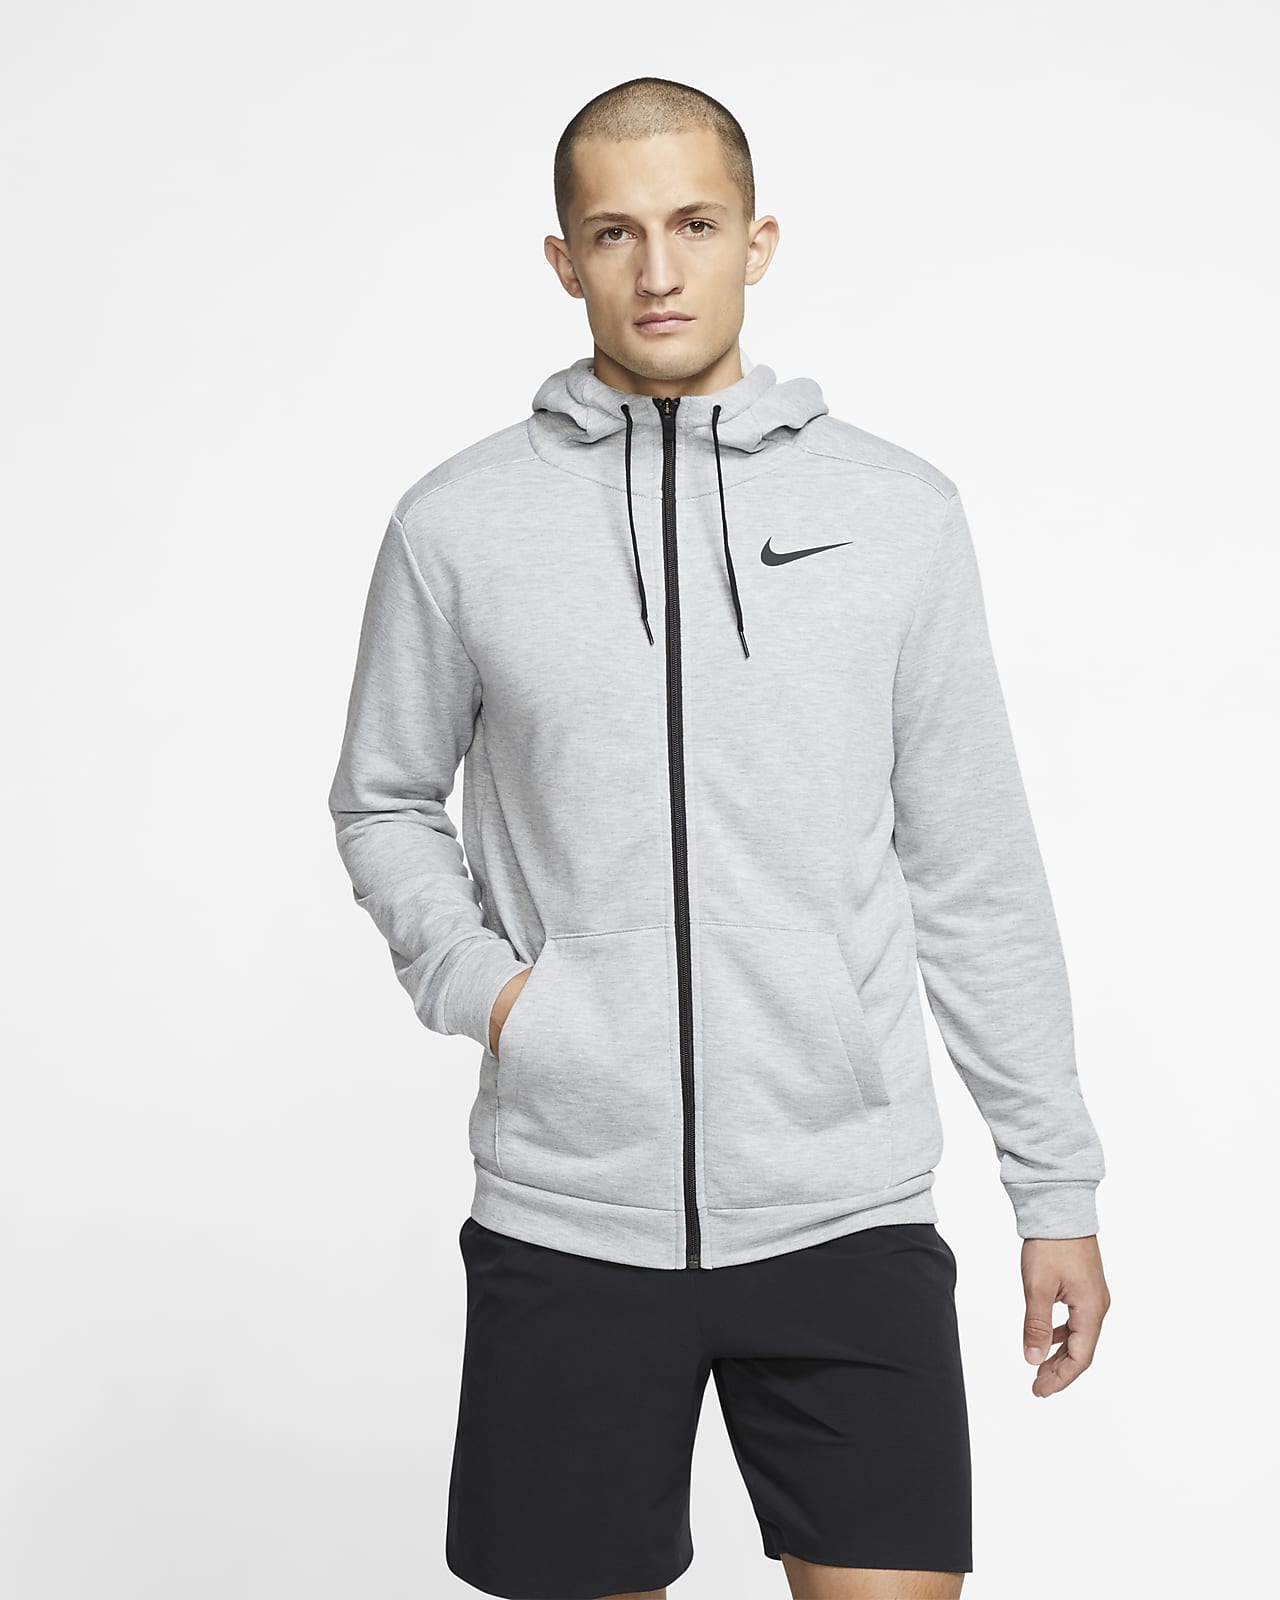 Nike Dri-FIT Sudadera con capucha entrenamiento cremallera completa - Hombre. Nike